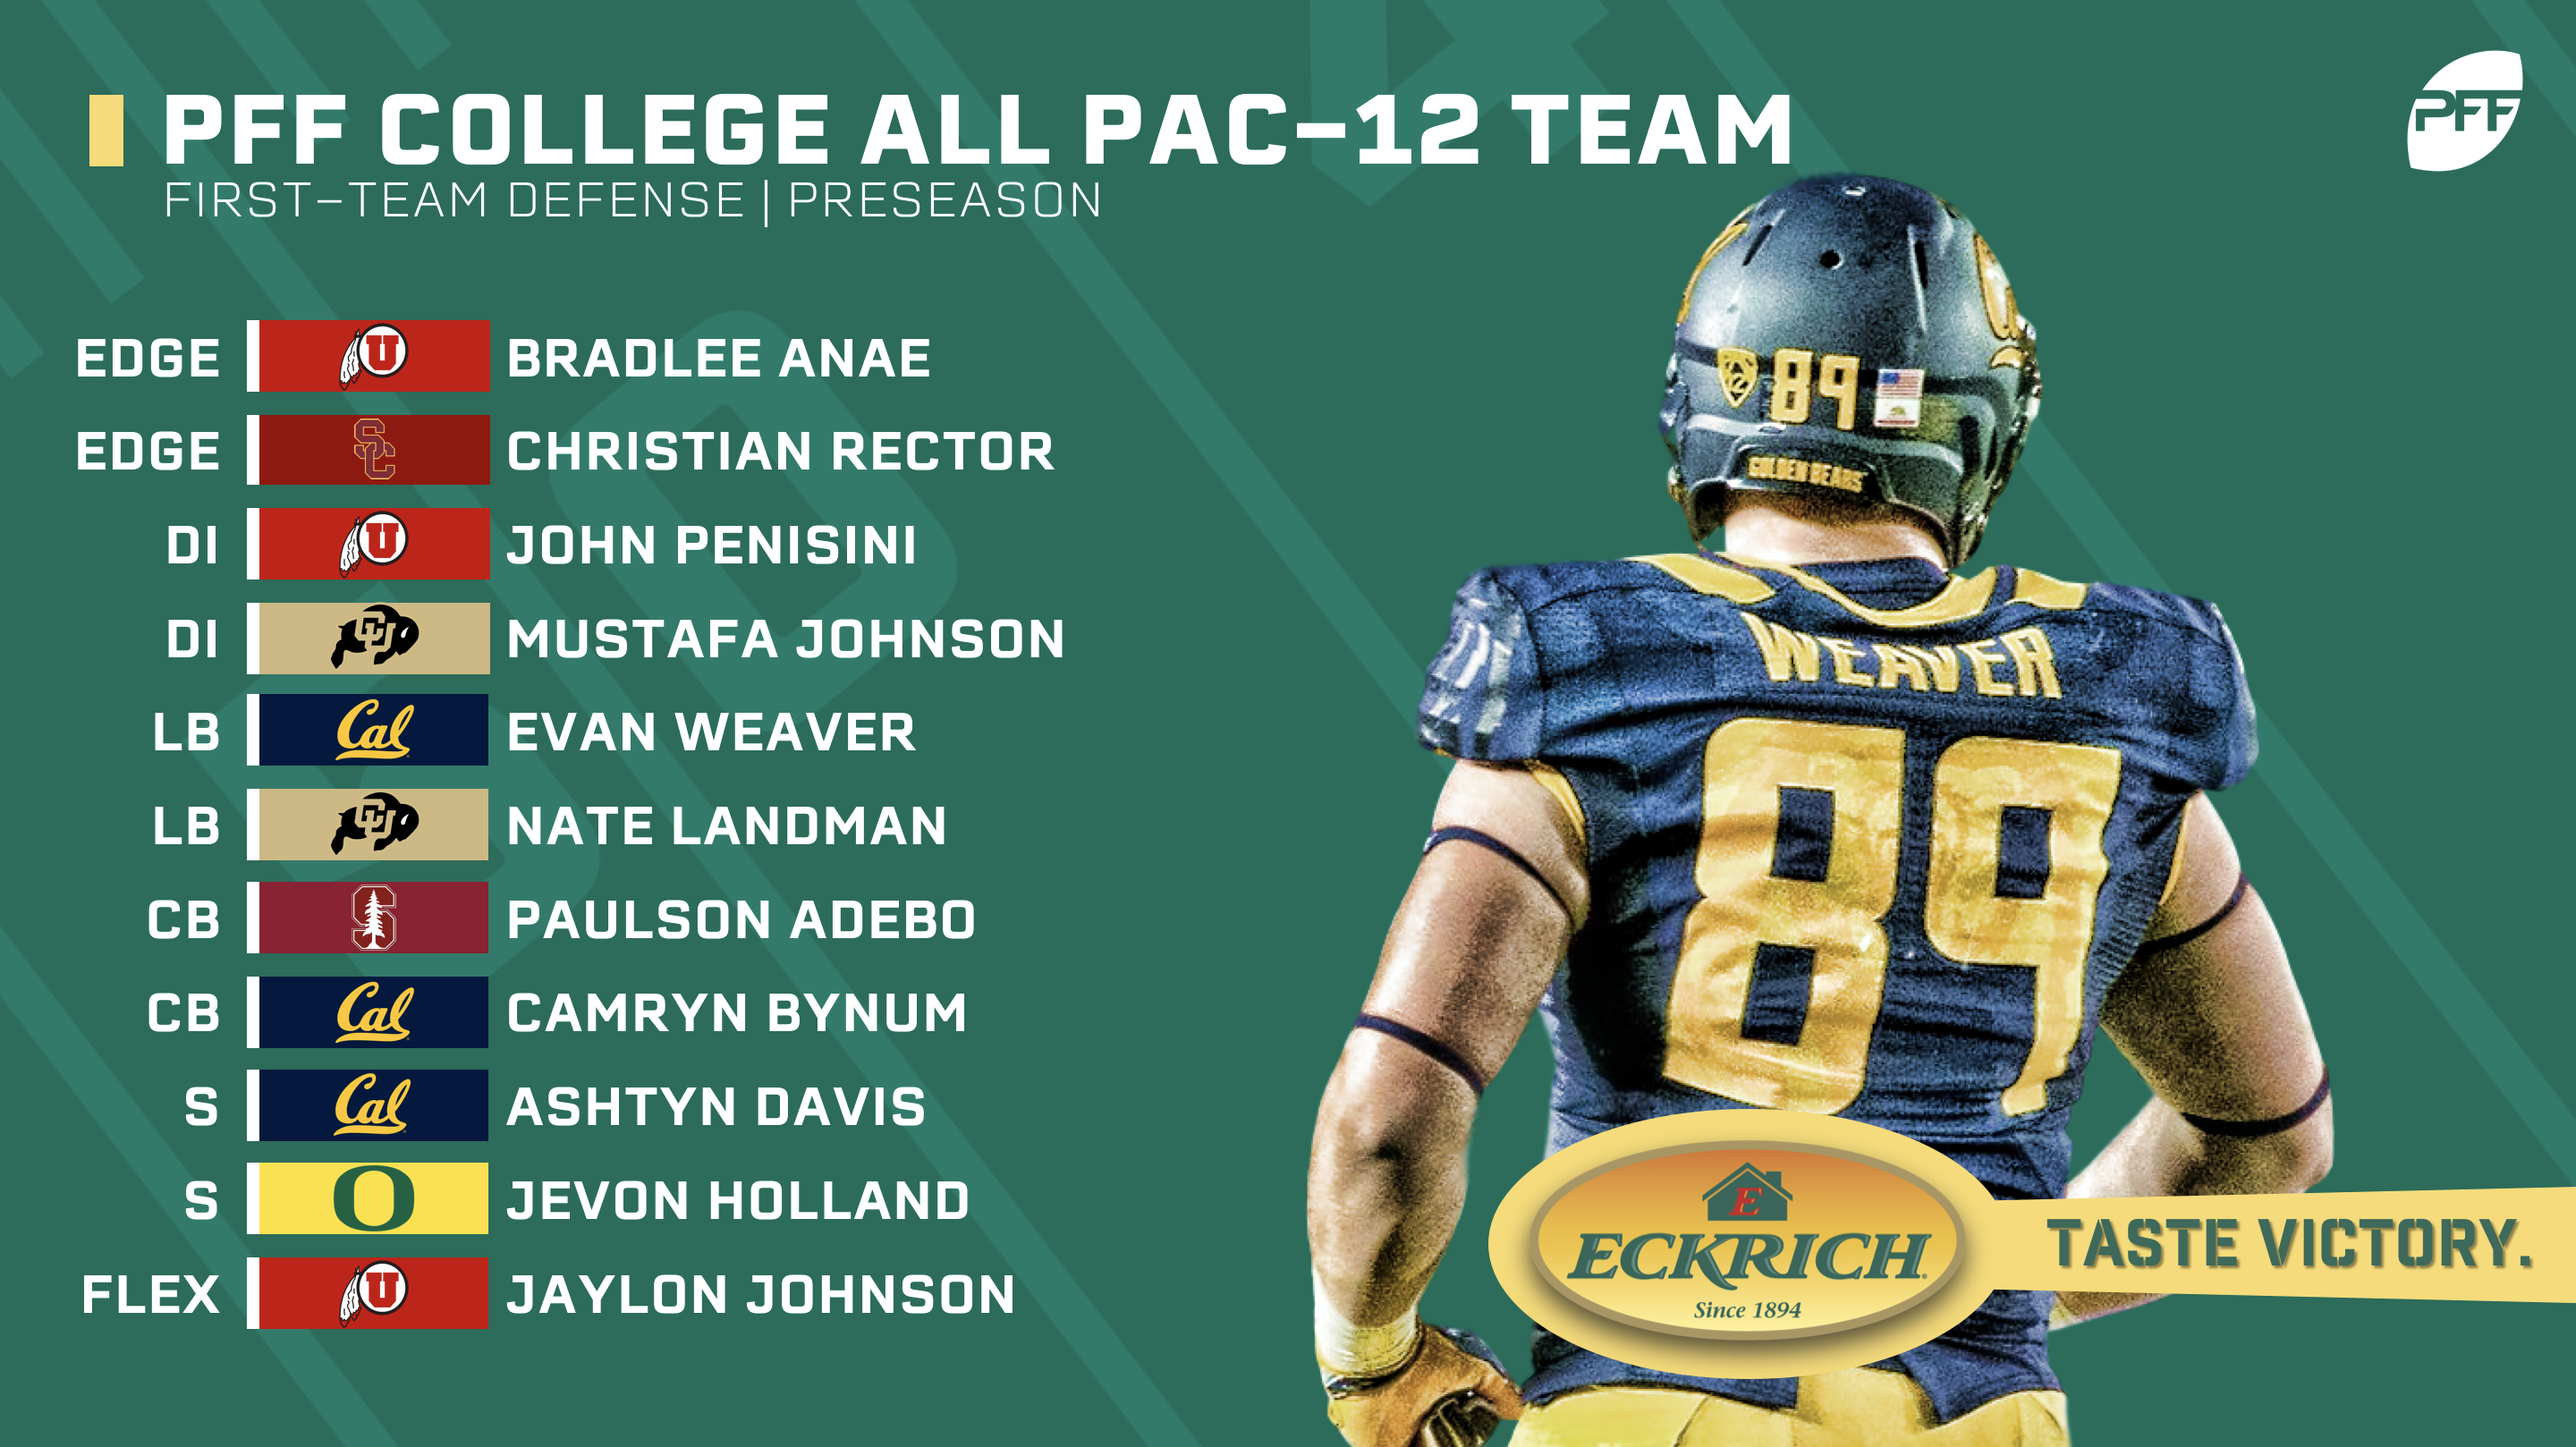 PFF Preseason 2019 All-Pac 12 Team, NFL Draft